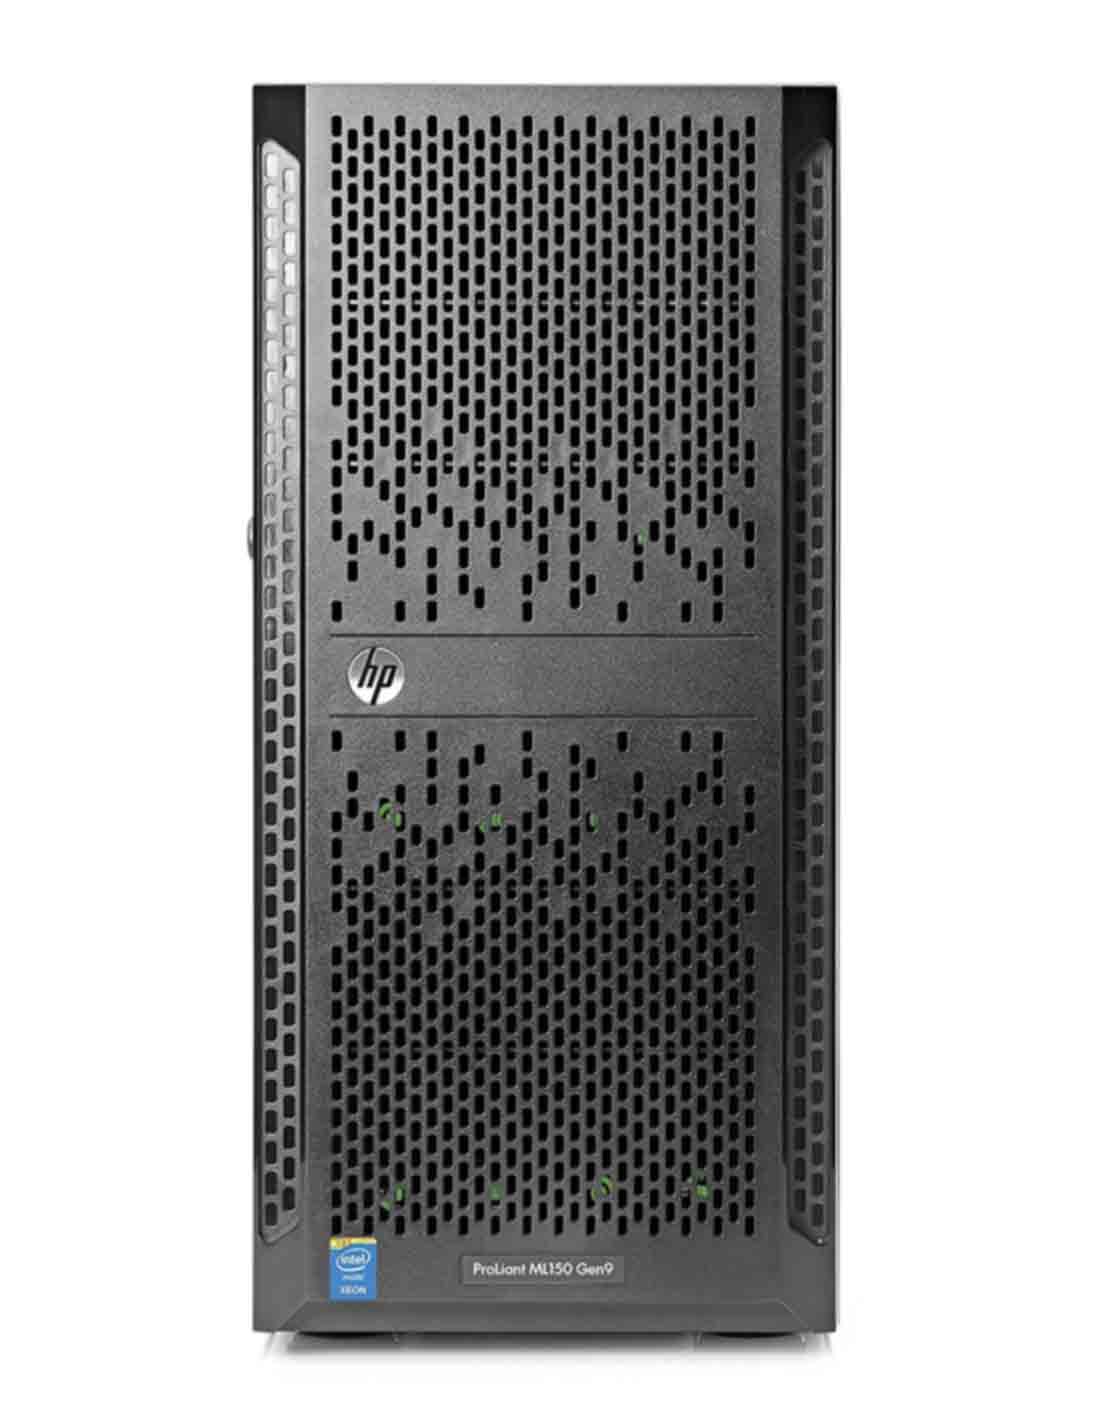 Buy Online HP ProLiant ML150 Gen9 E5-2620v4 Server at a Cheap Price in Dubai